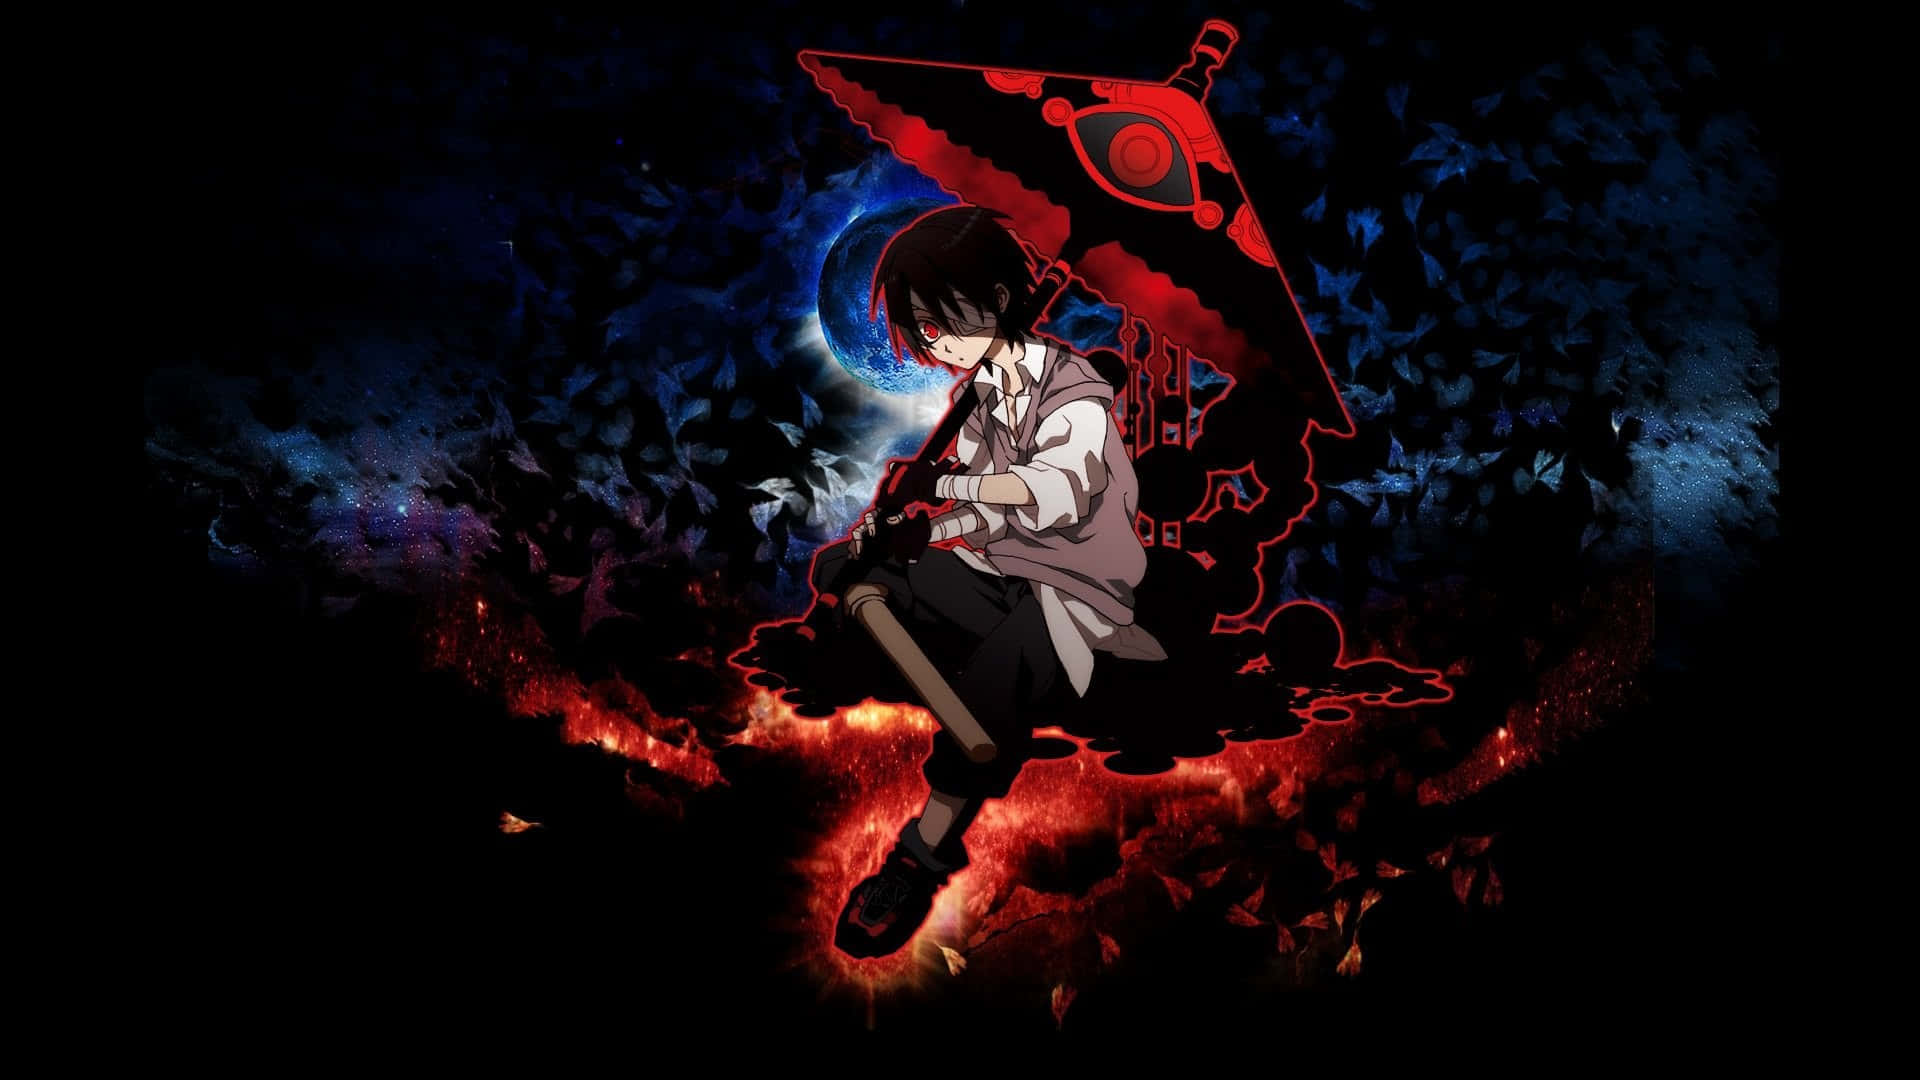 An Outcasted Dark Anime Boy Wallpaper